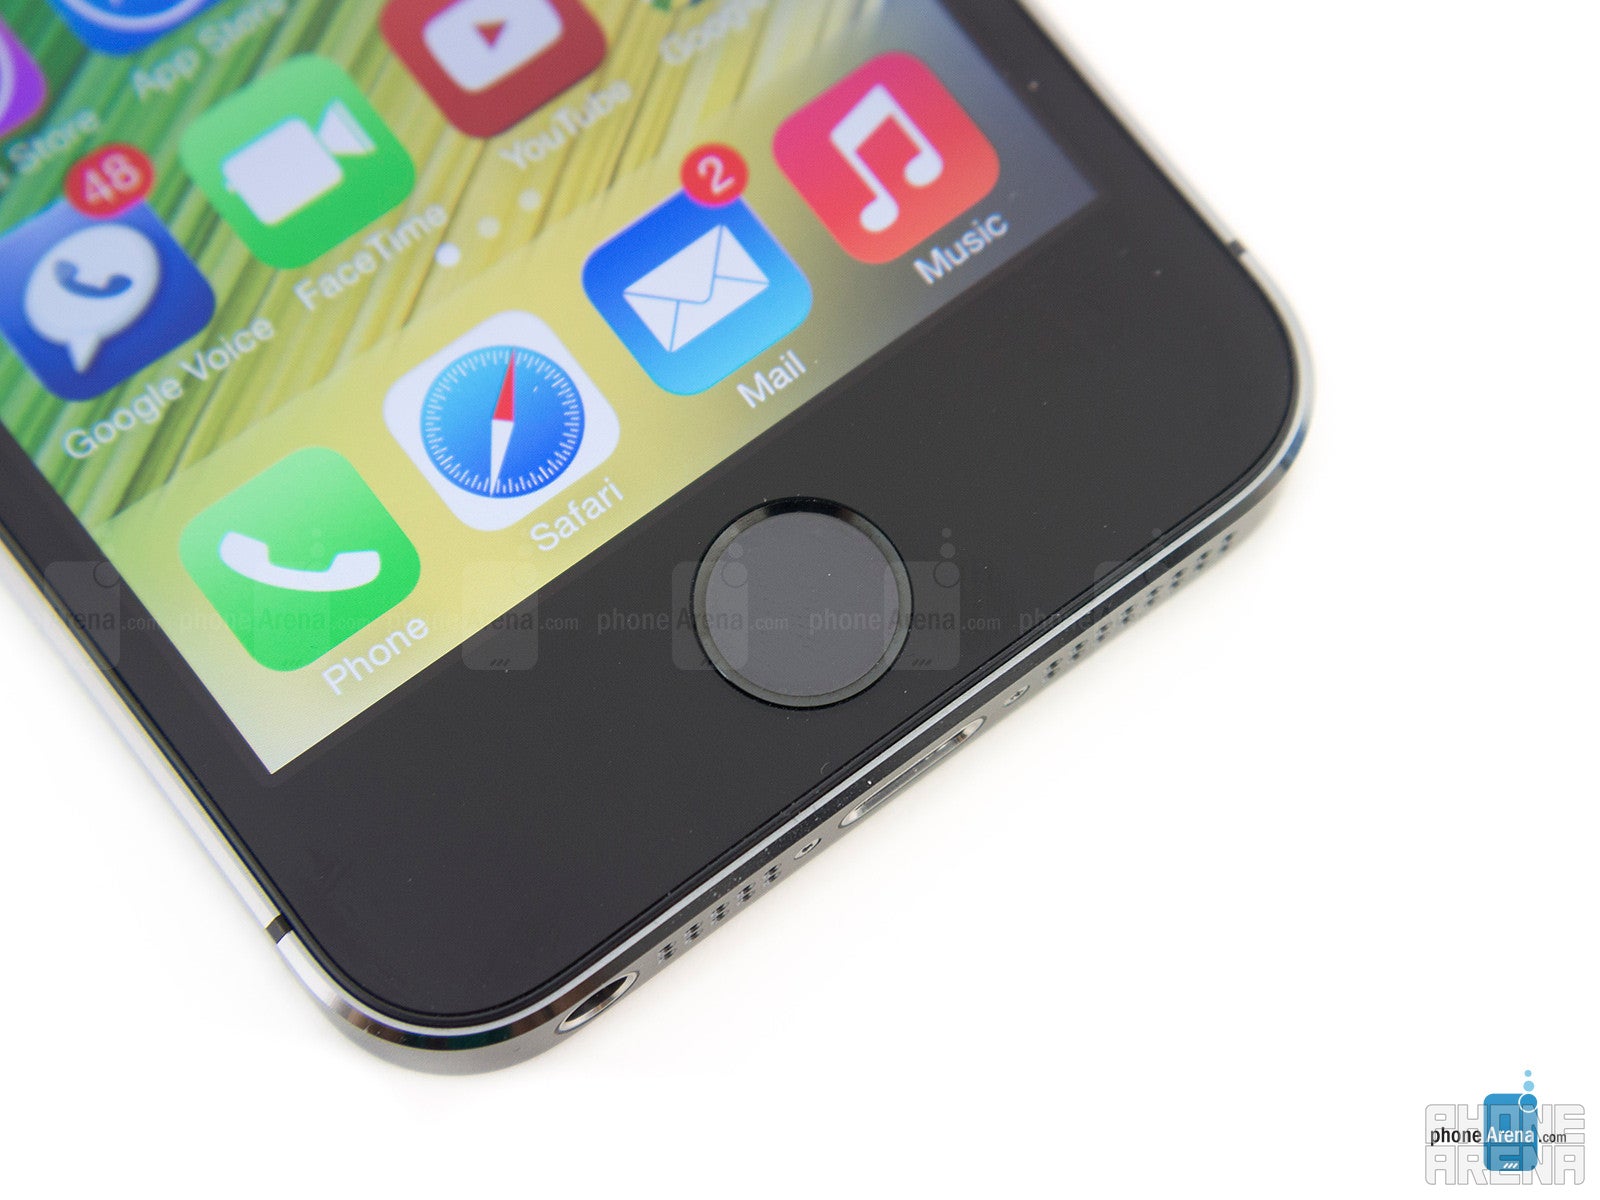 Apple iPhone 5S -  External Reviews